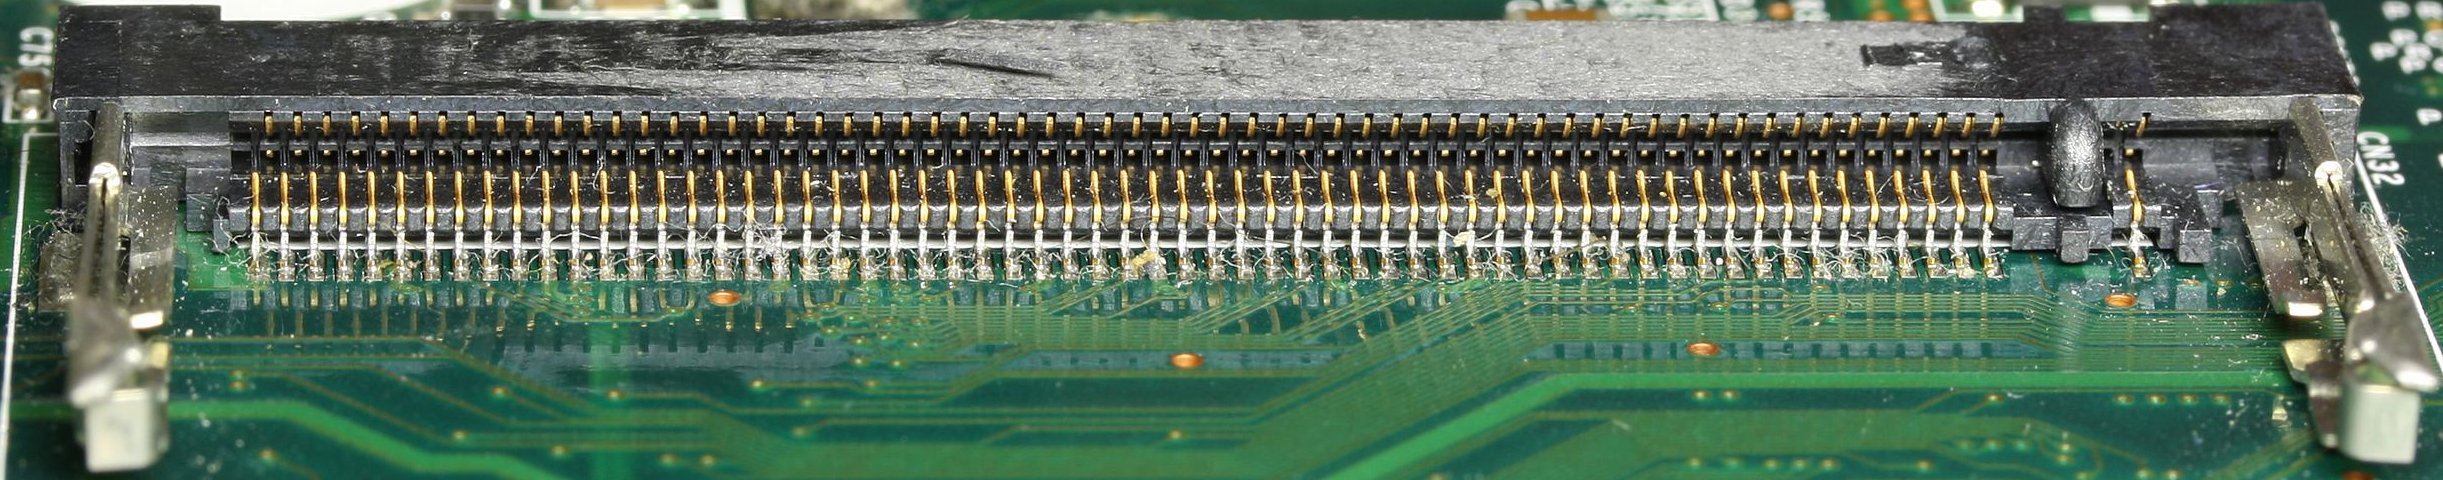 124 pin Mini-PCI Type III (Amp 1318228-1) photo and diagram